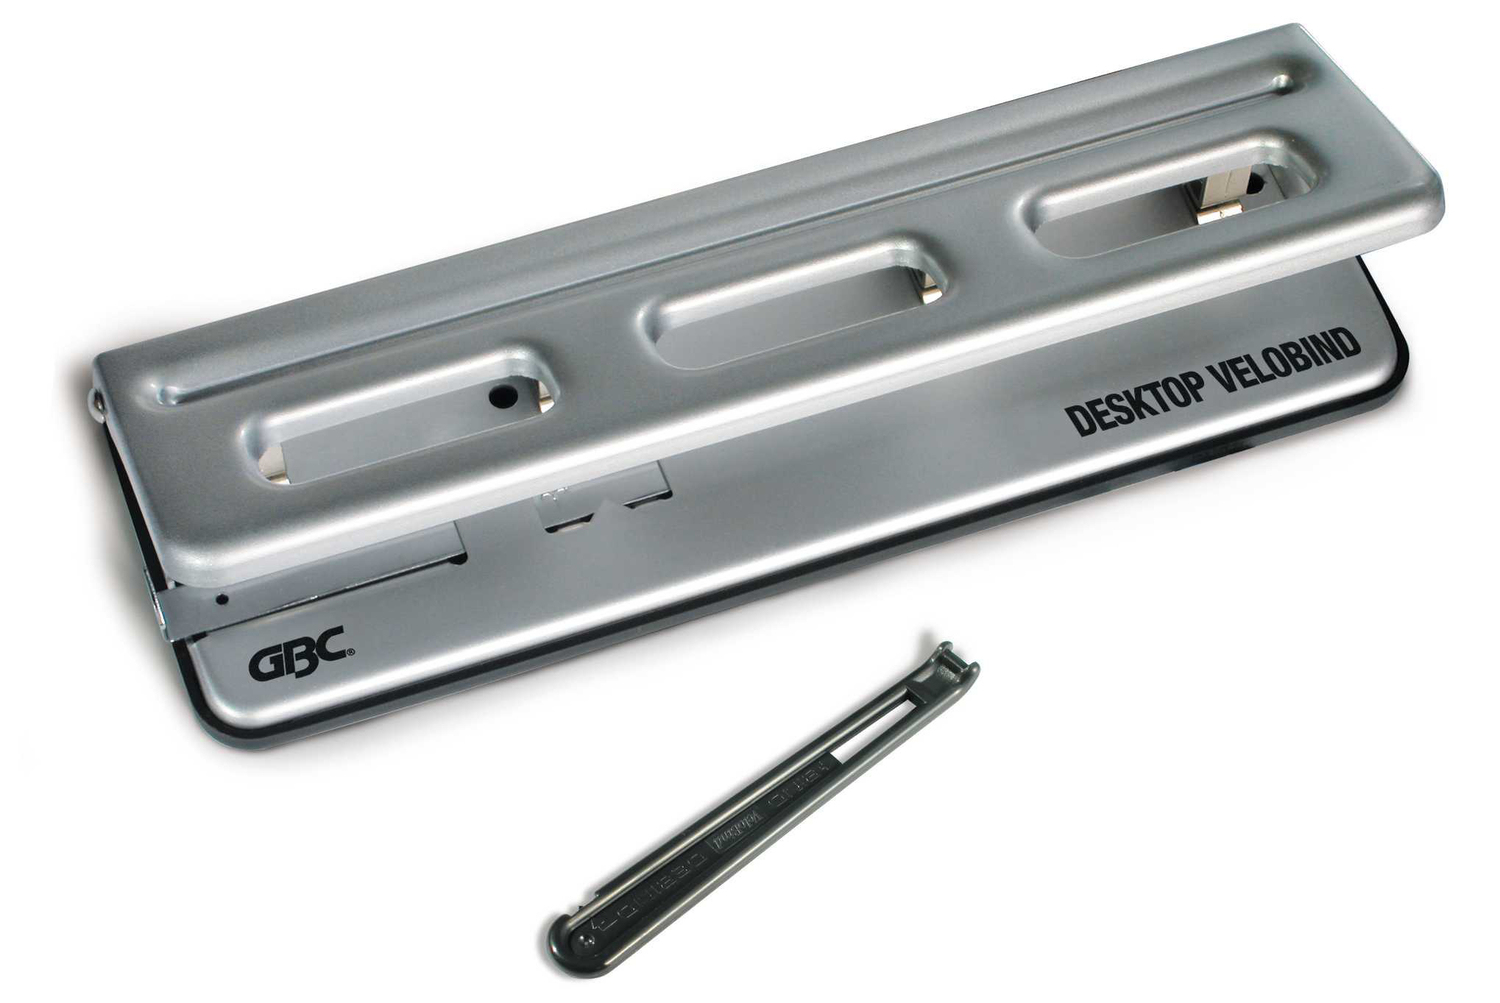 GBC Desktop VeloBinder Strip Binder